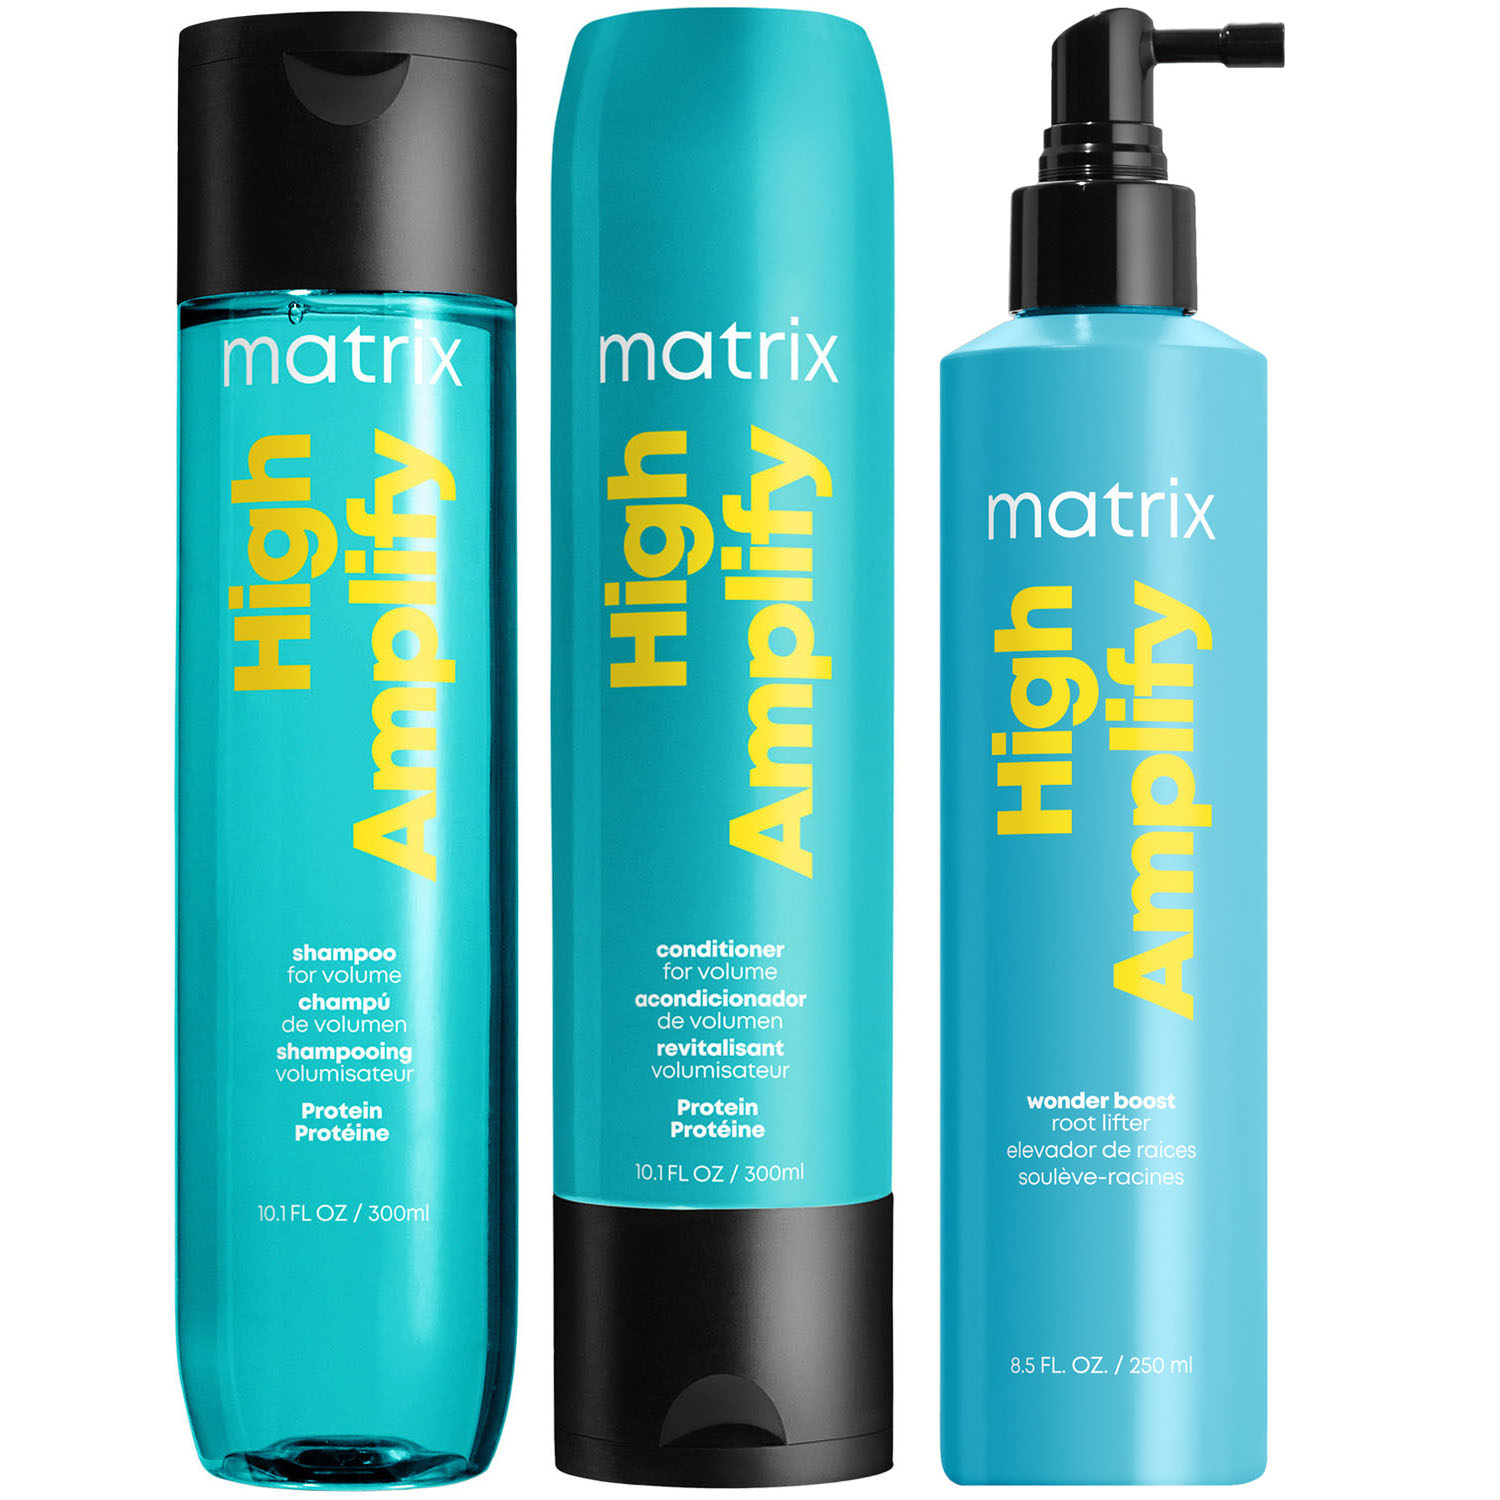 Matrix Набор для объема волос: шампунь 300 мл + кондиционер 300 мл + спрей 250 мл (Matrix, Total results) спрей для придания объема волосам wonder boost high amplify total results matrix матрикс 250мл